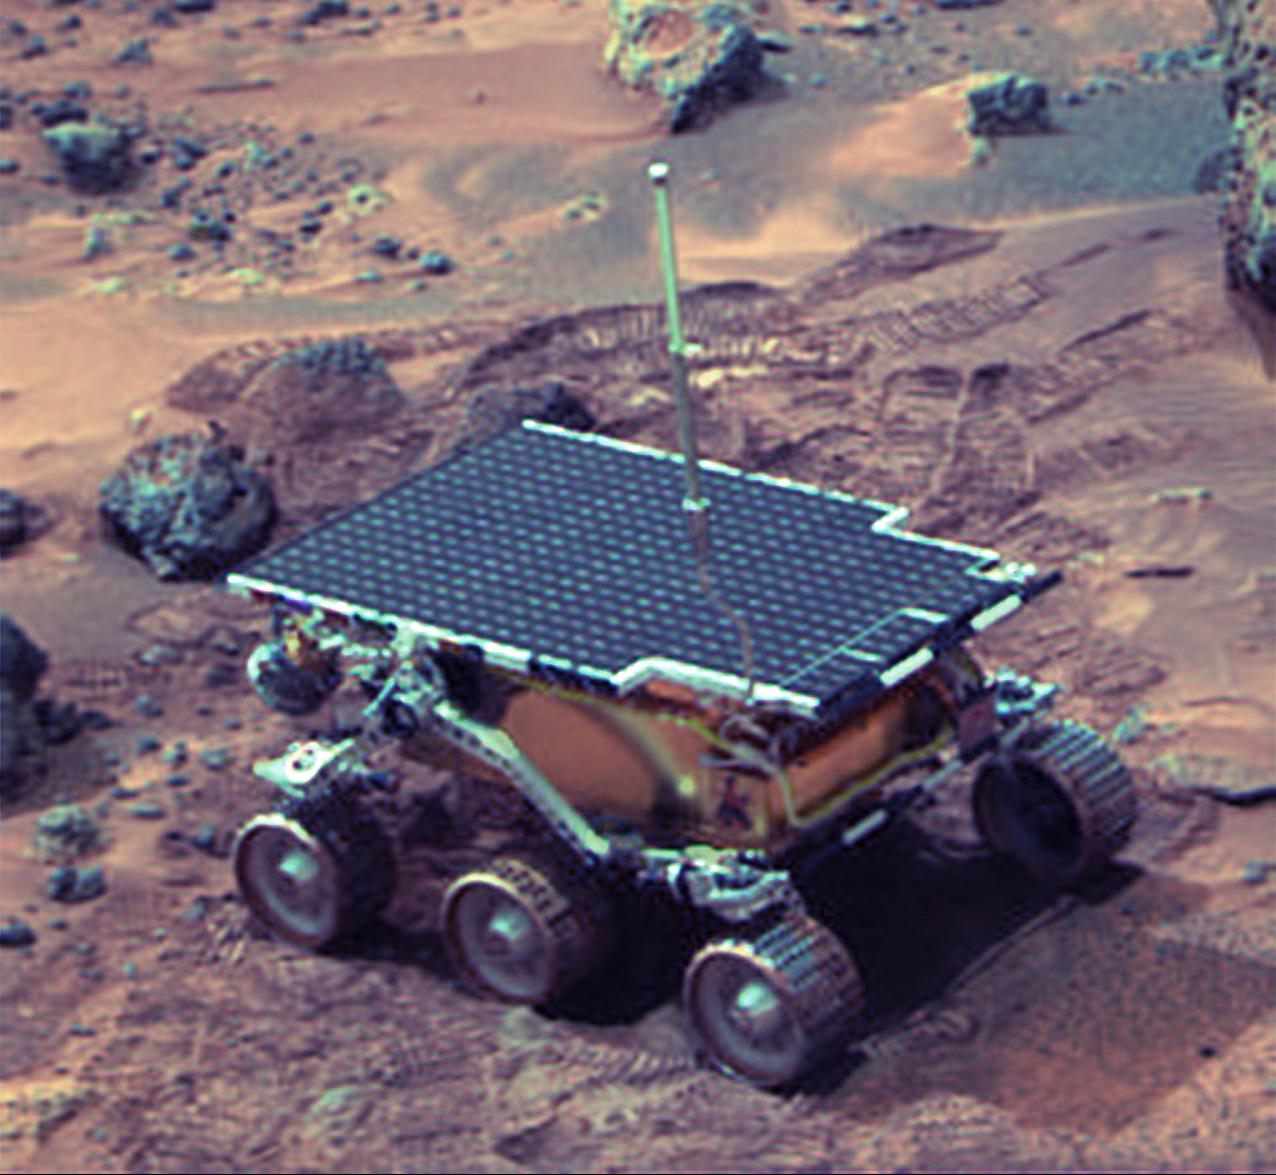 NASA’s Sojourner Mars rover